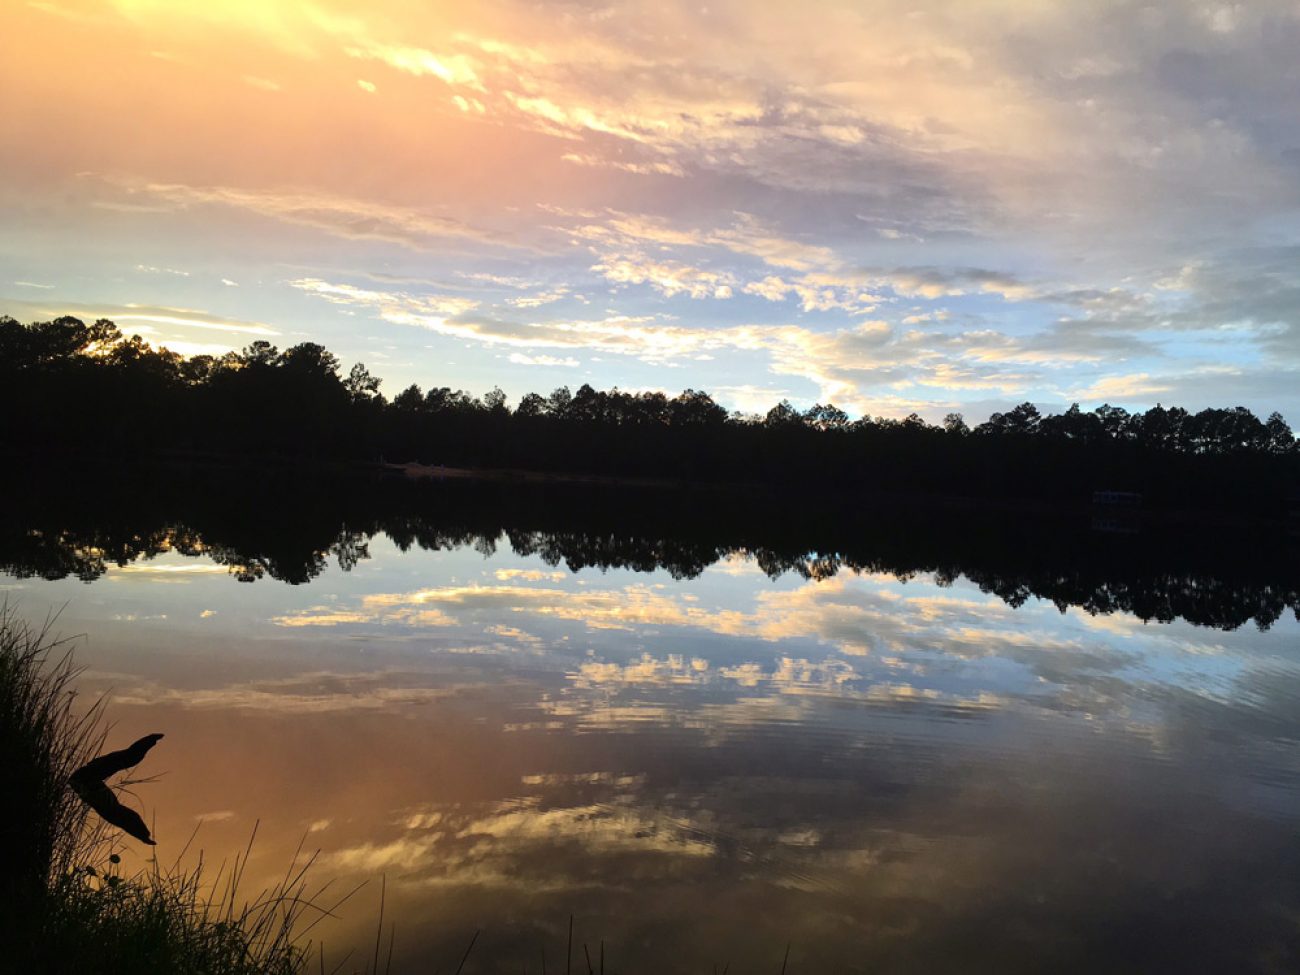 Sunset at Harmony Lake